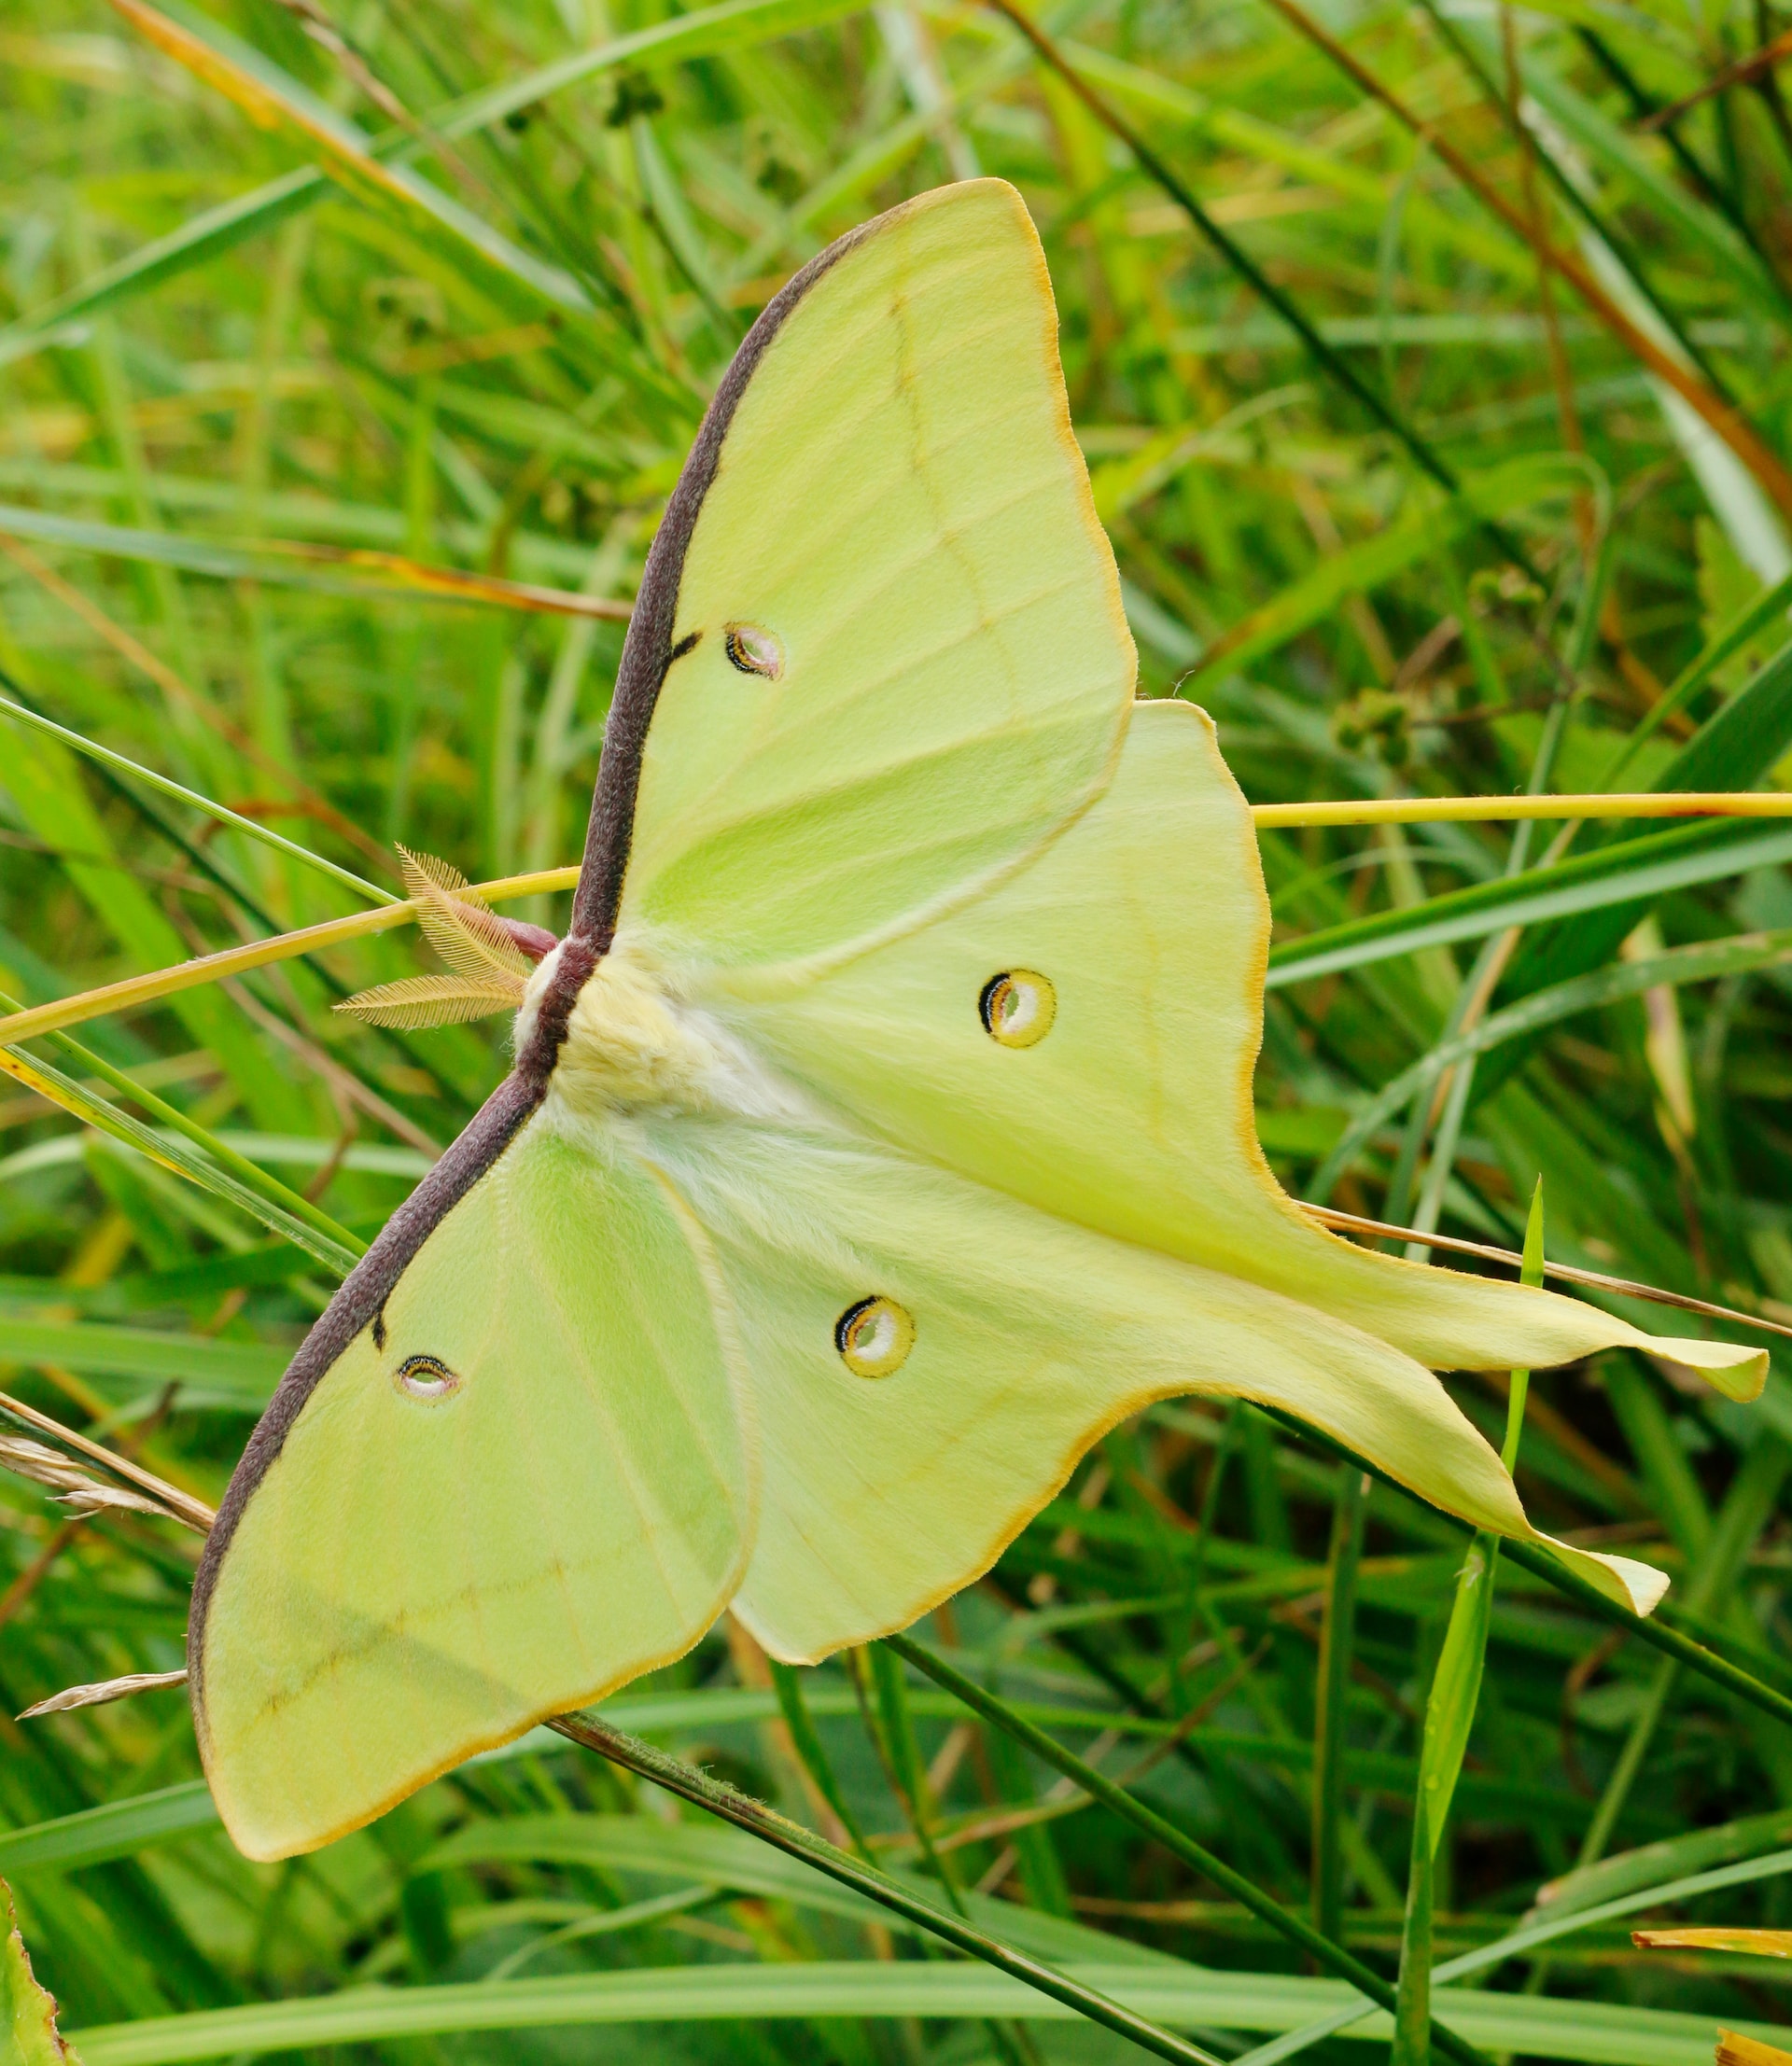 A luna moth, sitting on green grass